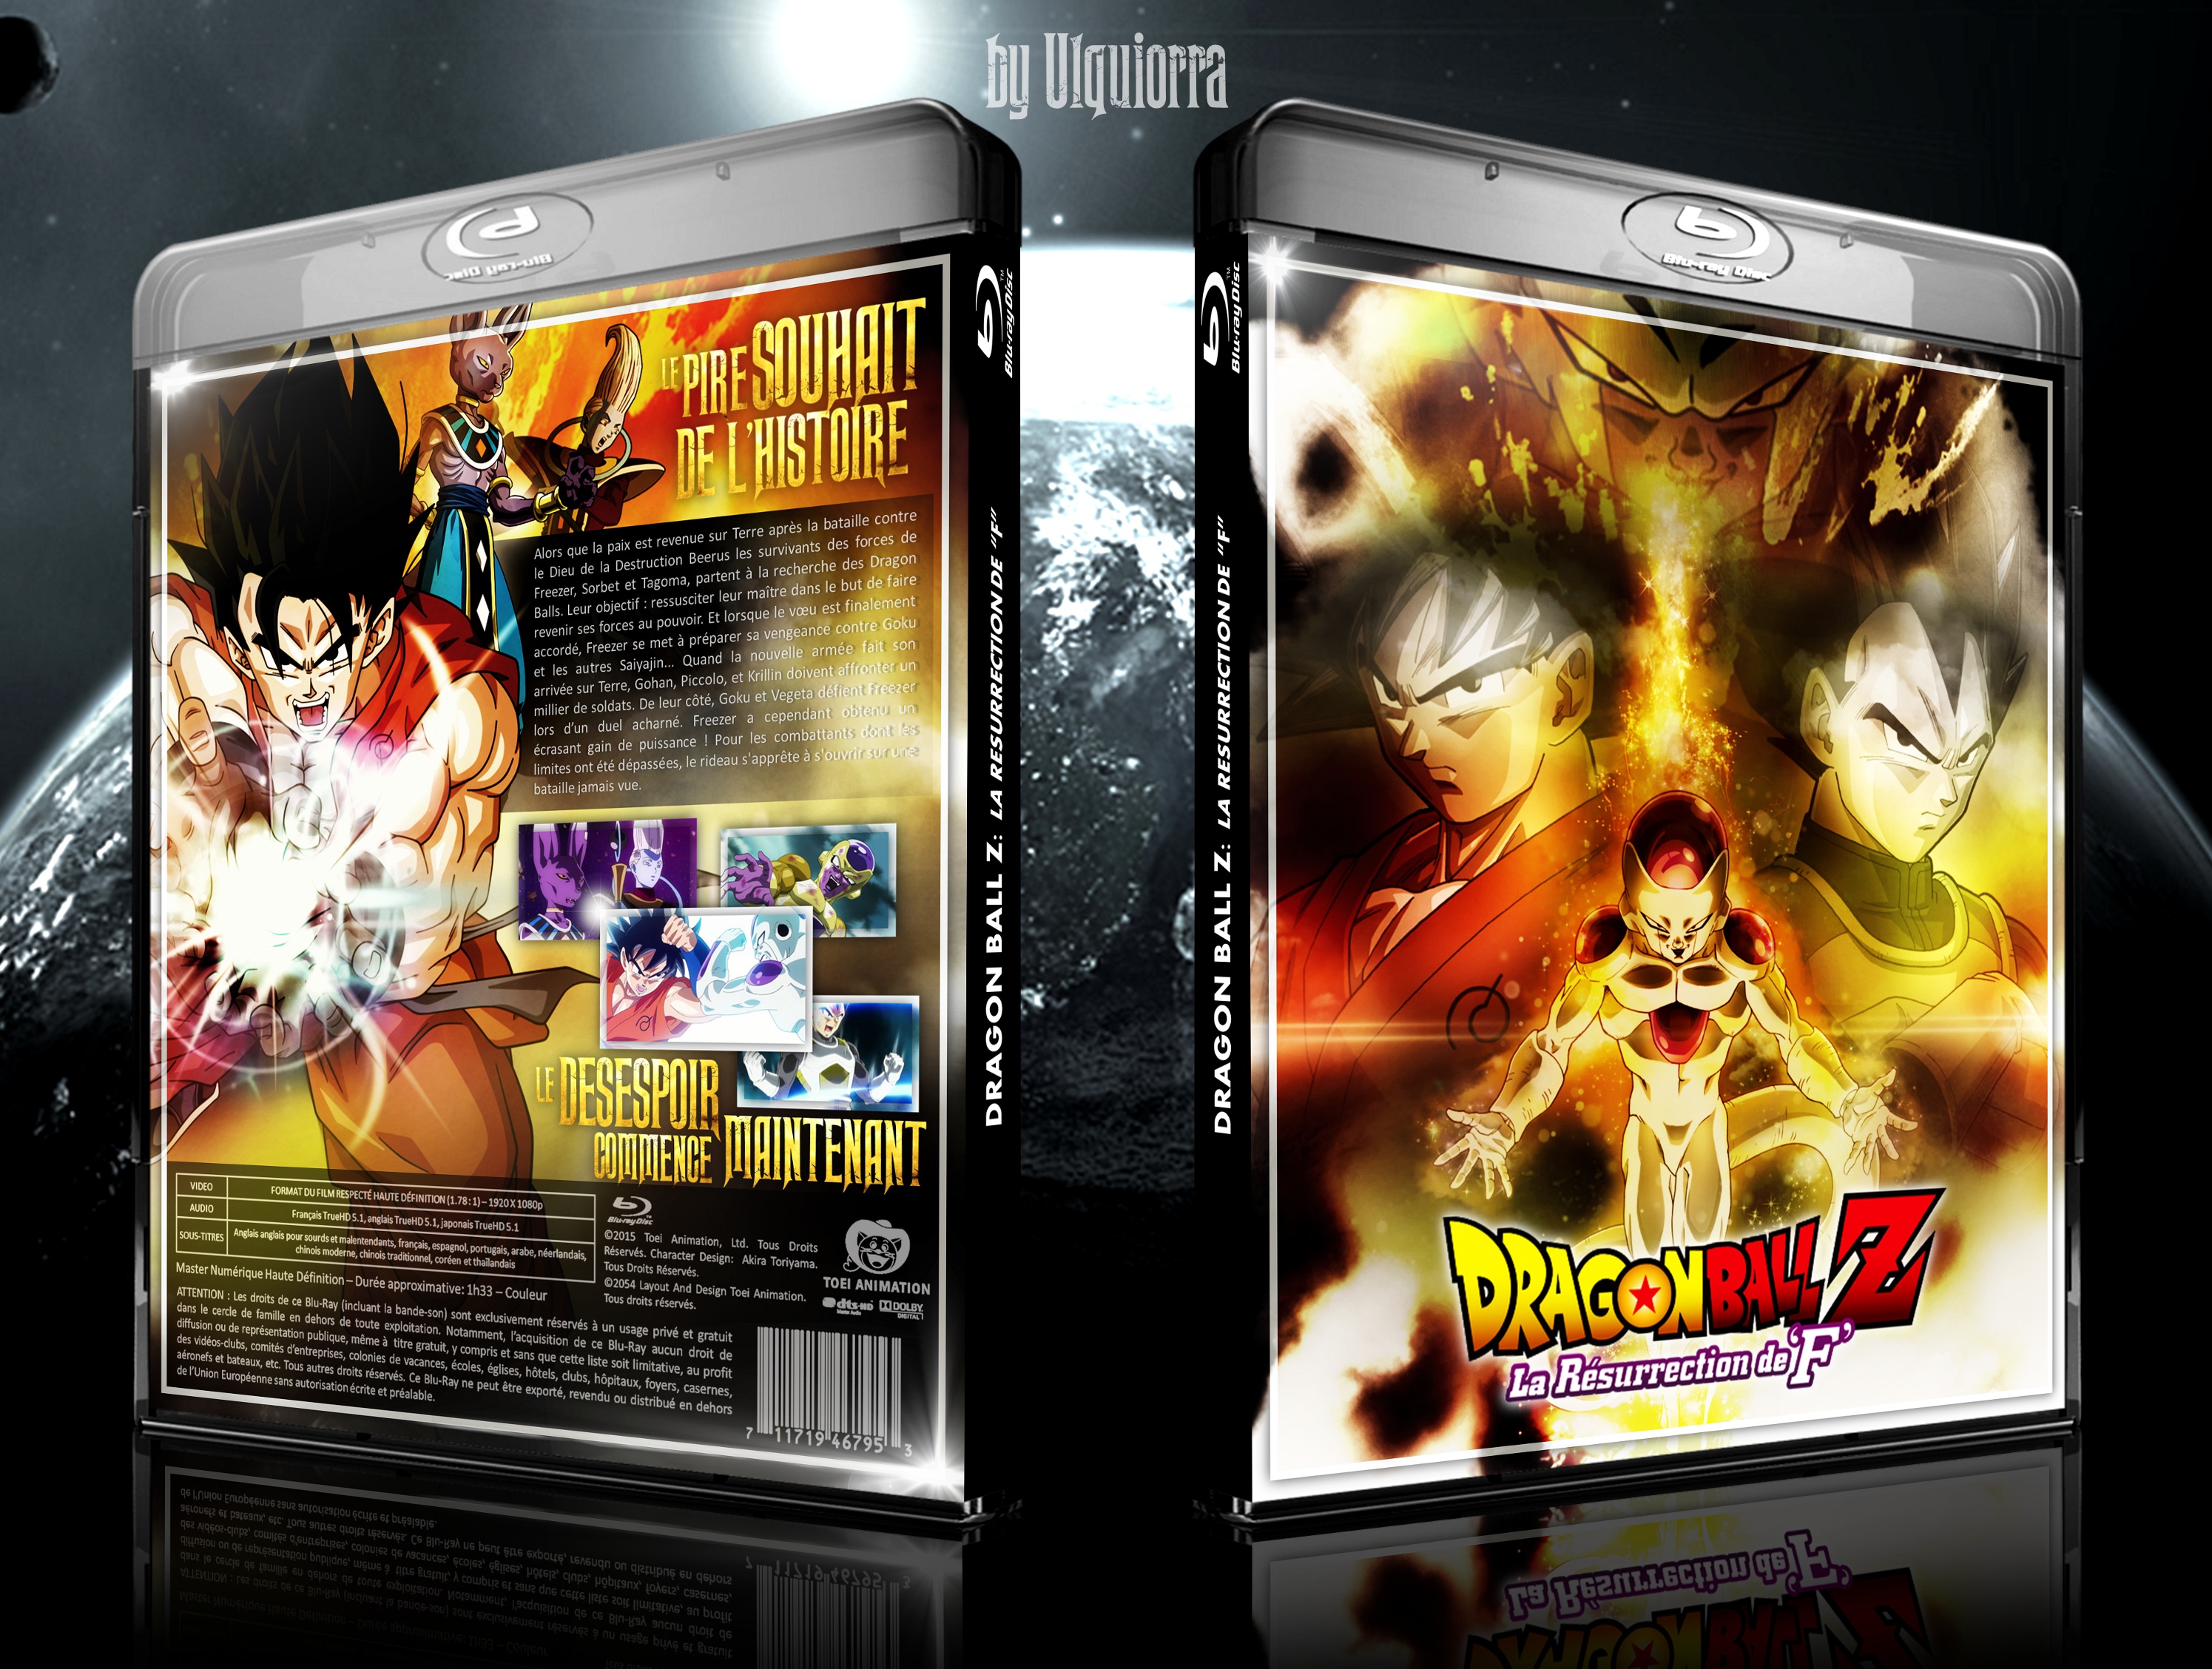 Dragon Ball Z: Revival of "F" box cover